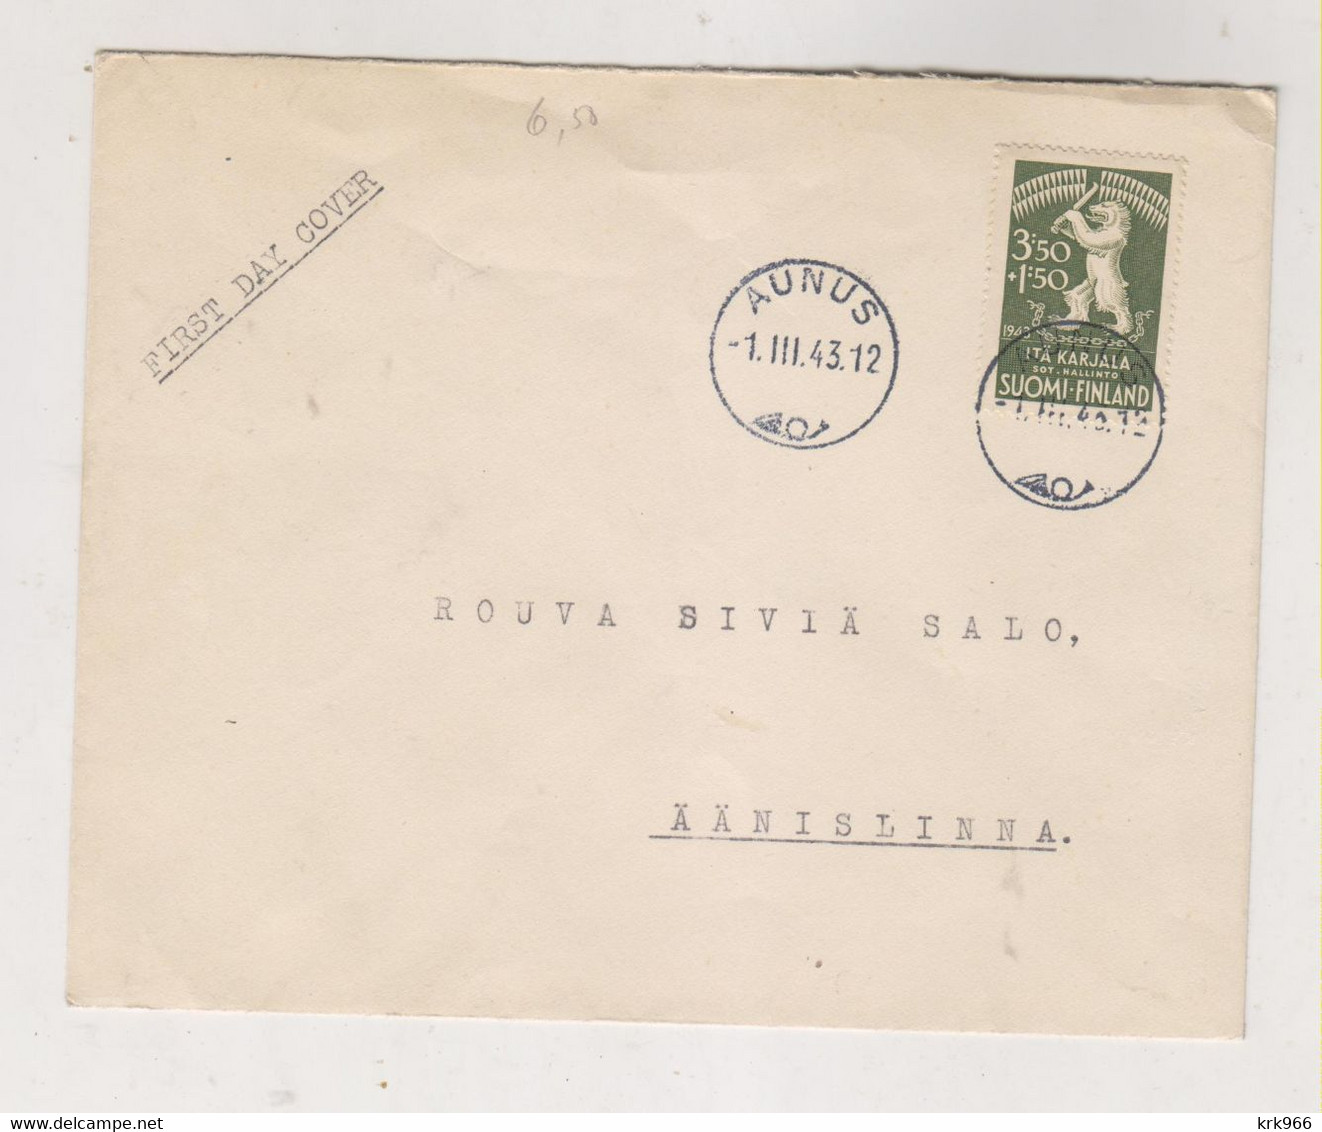 FINLAND WW II  1943 ITA KARJALA AUNUS FDC COVER - Local Post Stamps